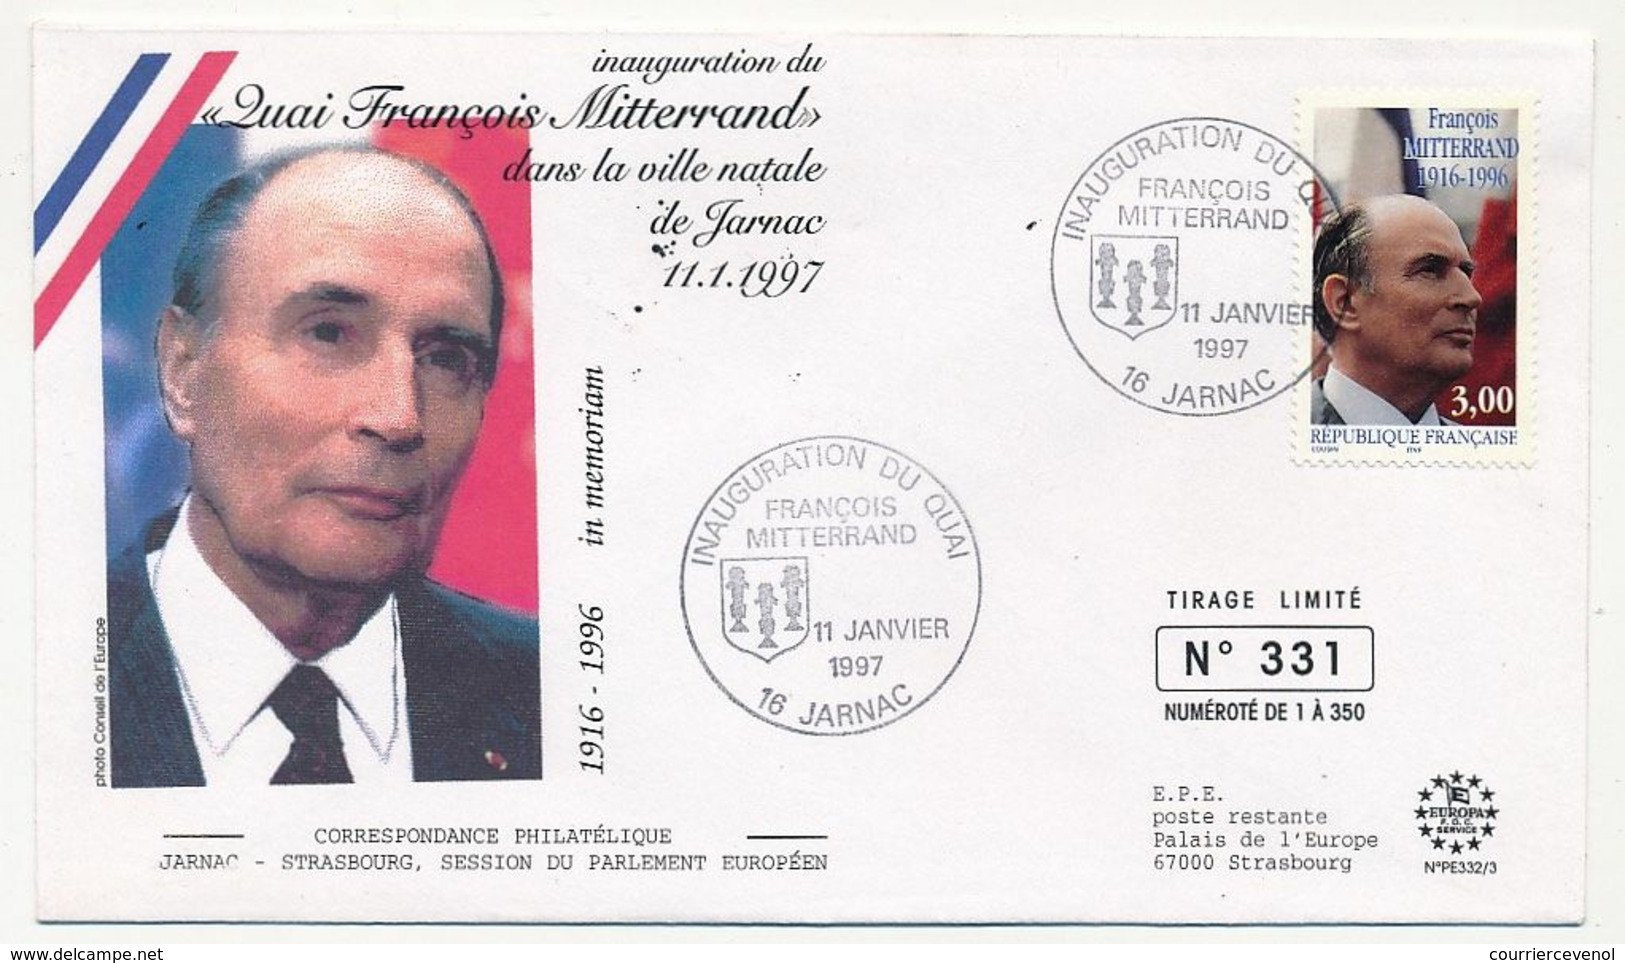 FRANCE - Env. Affr 3,00 François MITTERRAND, Obl "Inauguration Du Quai F. MITTERRAND" 16 Jarnac 11/1/1997 - Cachets Commémoratifs